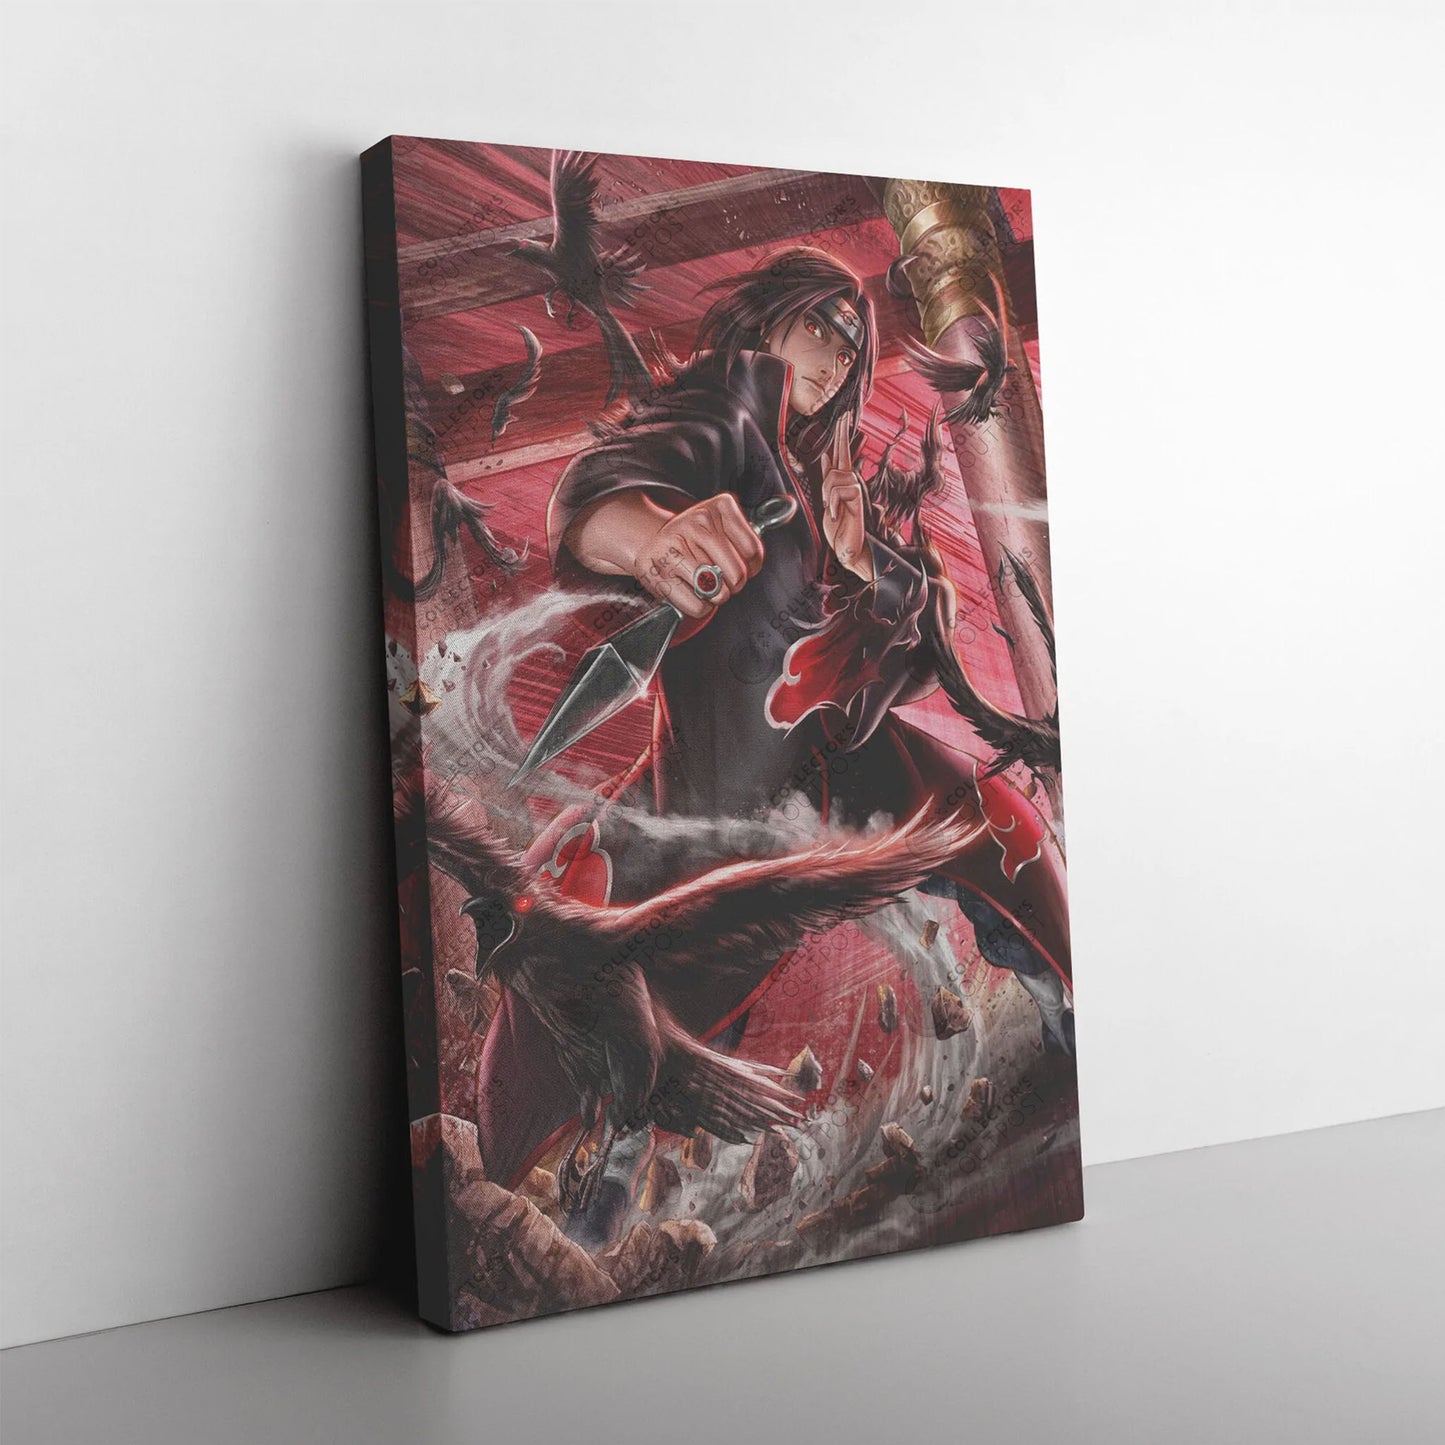 Load image into Gallery viewer, Itachi &amp;quot;The Clan Killer&amp;quot; (Naruto Shippuden) Premium Art Print
